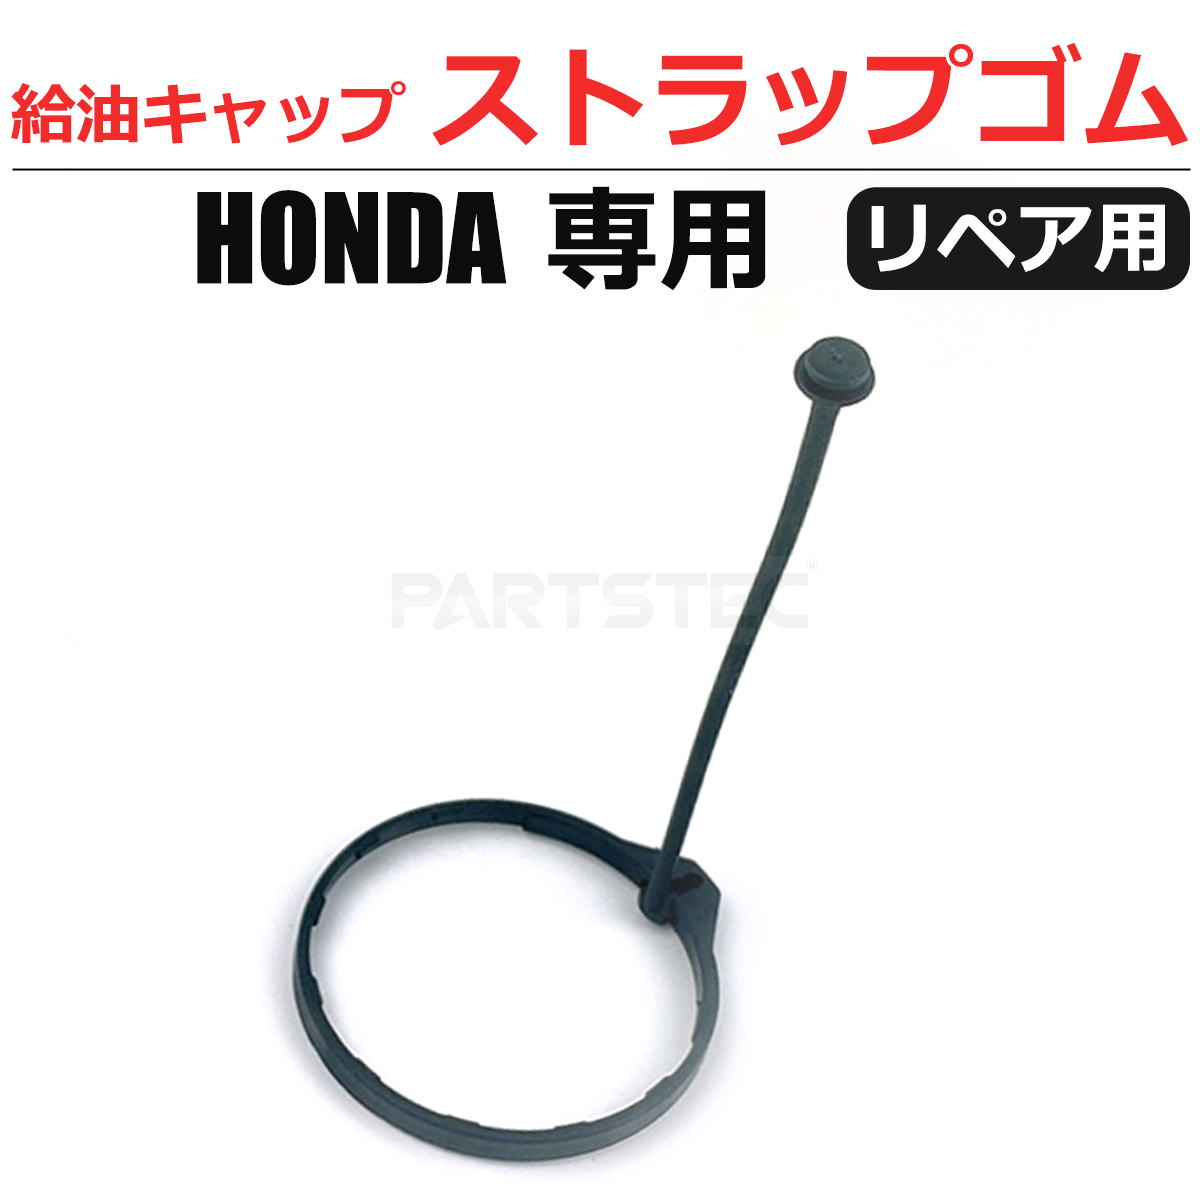  Honda oil supply cap strap rubber gasoline cap fuel cap fuel cap original exchange repair Odyssey Fit Freed N-BOX /147-68